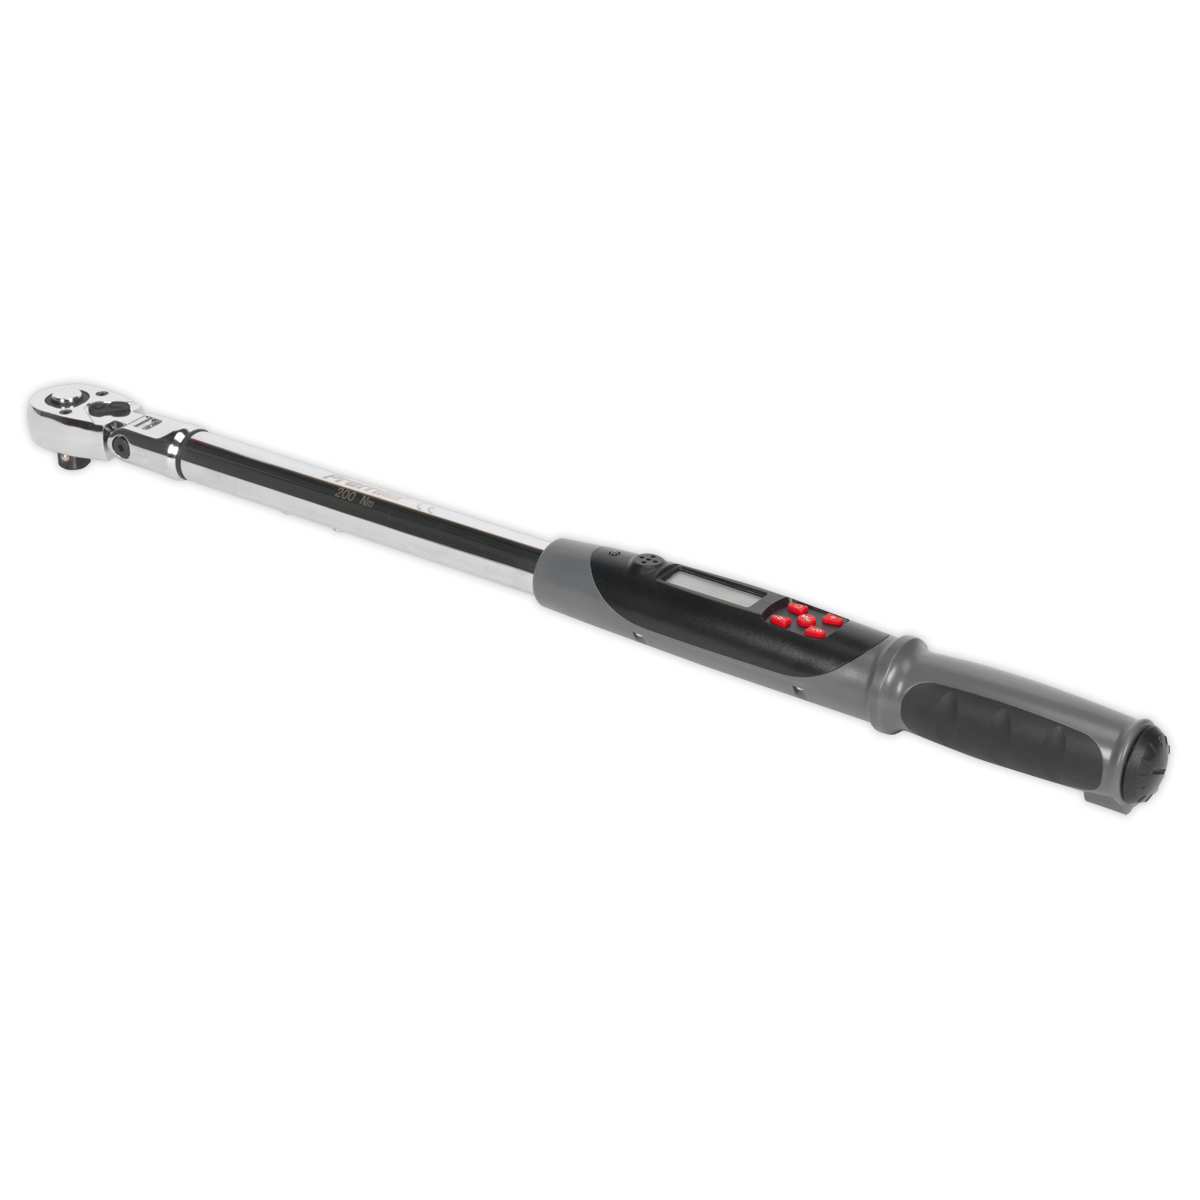 Sealey Angle Torque Wrench Flexi-Head Digital 1/2"Sq Drive 20-200Nm(14.7-147.5lb.ft)